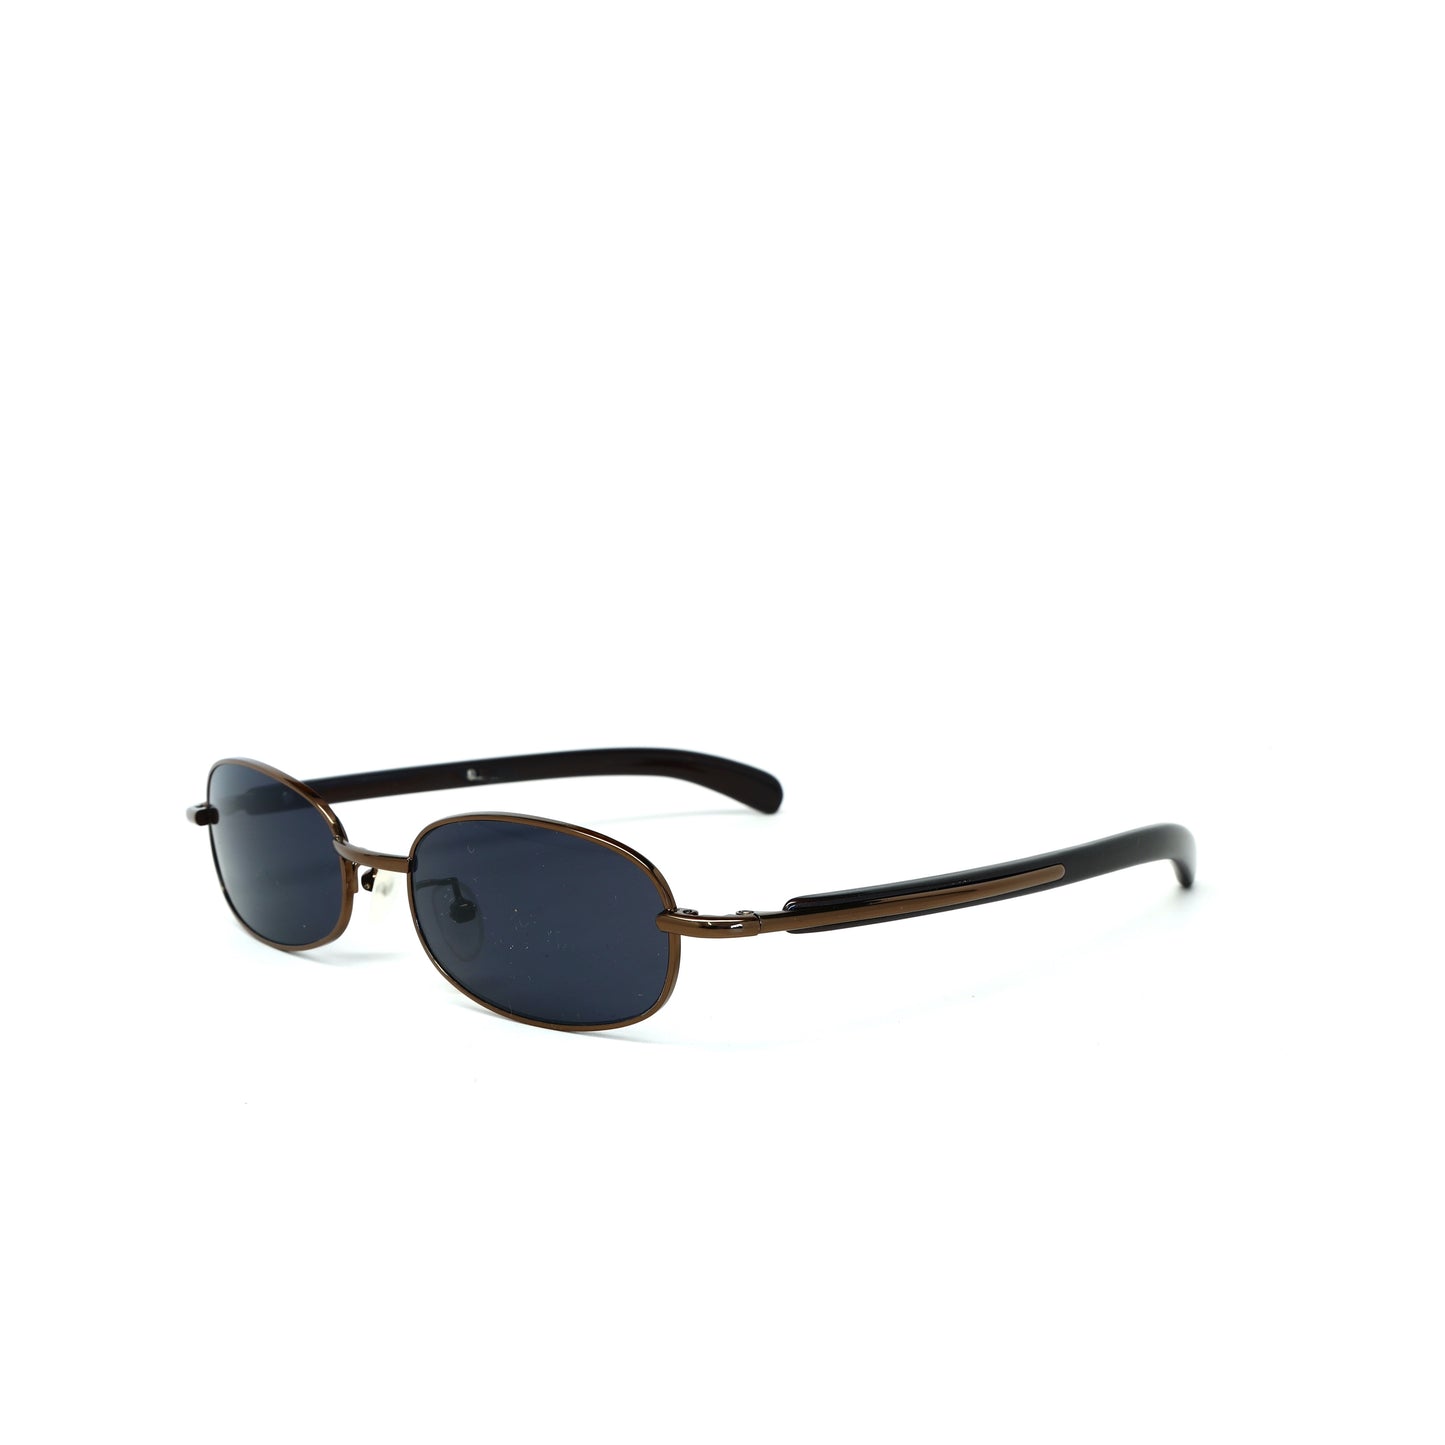 Vintage 90s Small Size Narrow Frame Wraparound  Sunglasses - Bronze